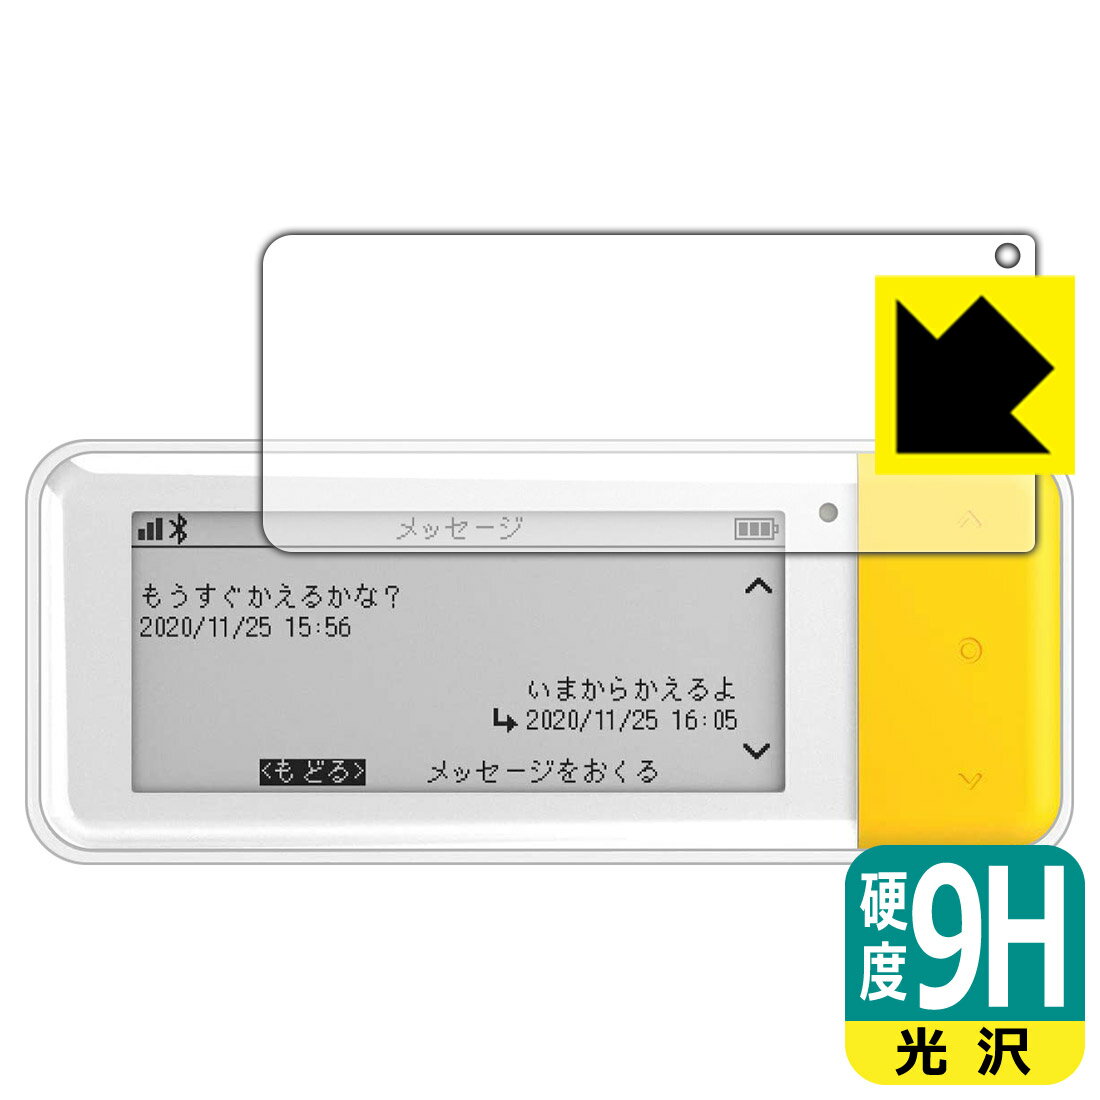 coneco (コネコ) DX900 用 9H高硬度【光沢】保護フィルム 日本製 自社製造直販